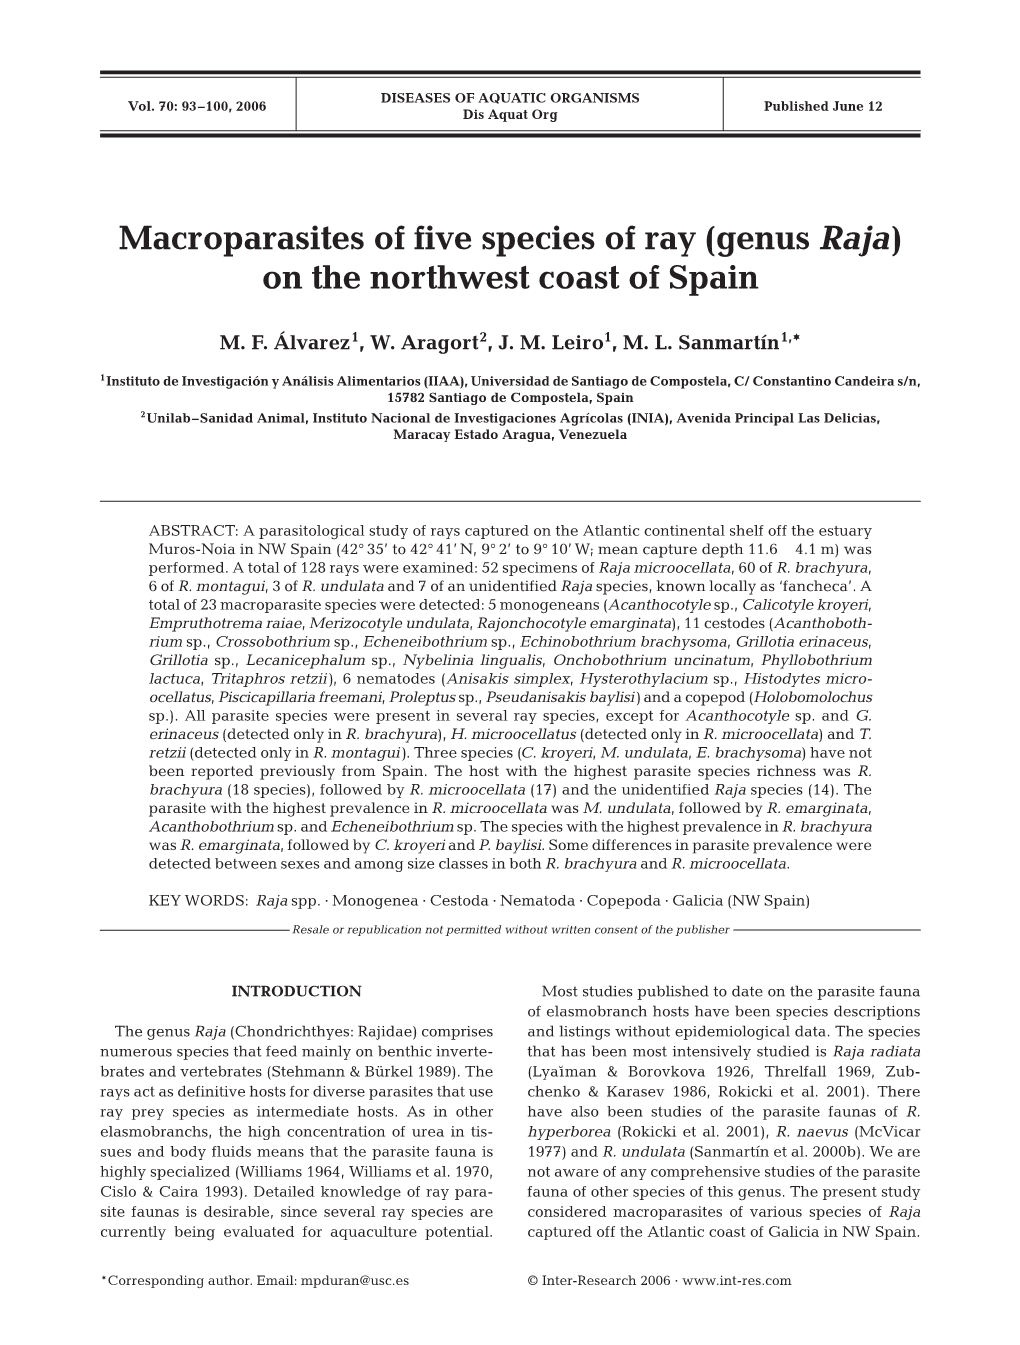 Macroparasites of Five Species of Ray (Genus Raja) on the Northwest Coast of Spain